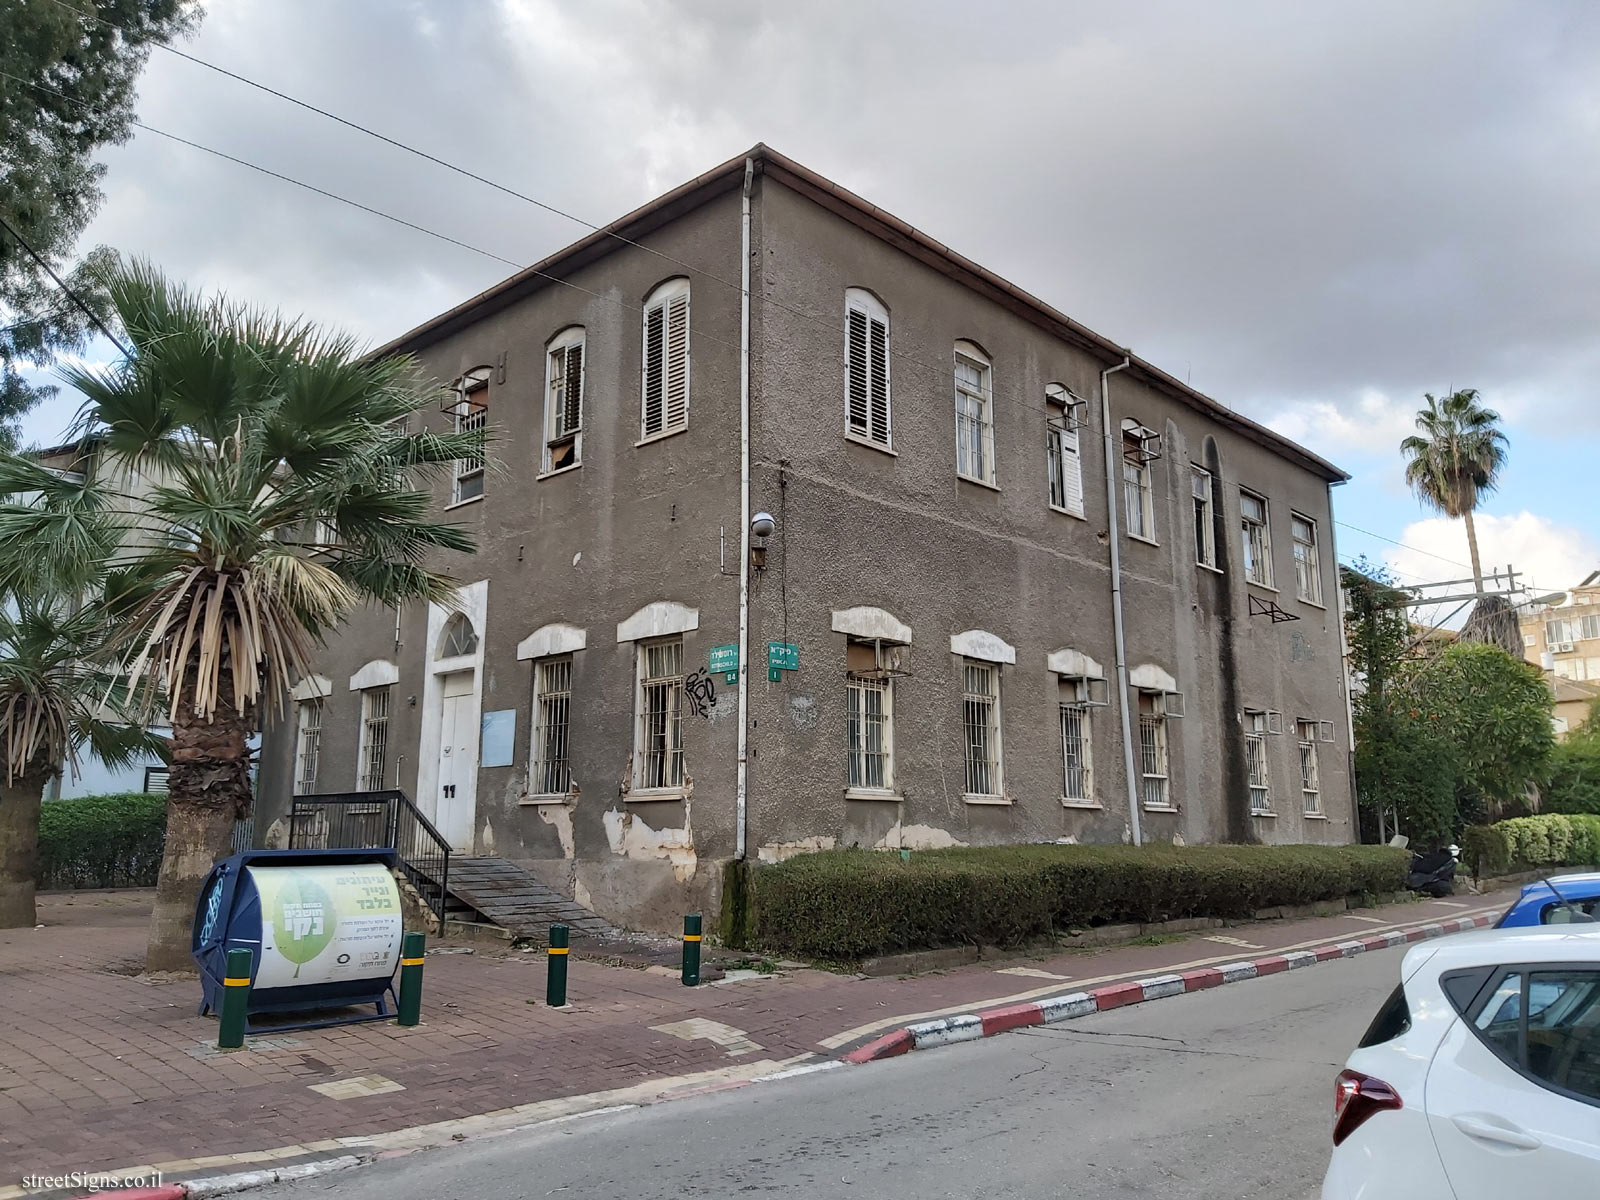 PIKA School - Rothschild St 84, Petah Tikva, Israel